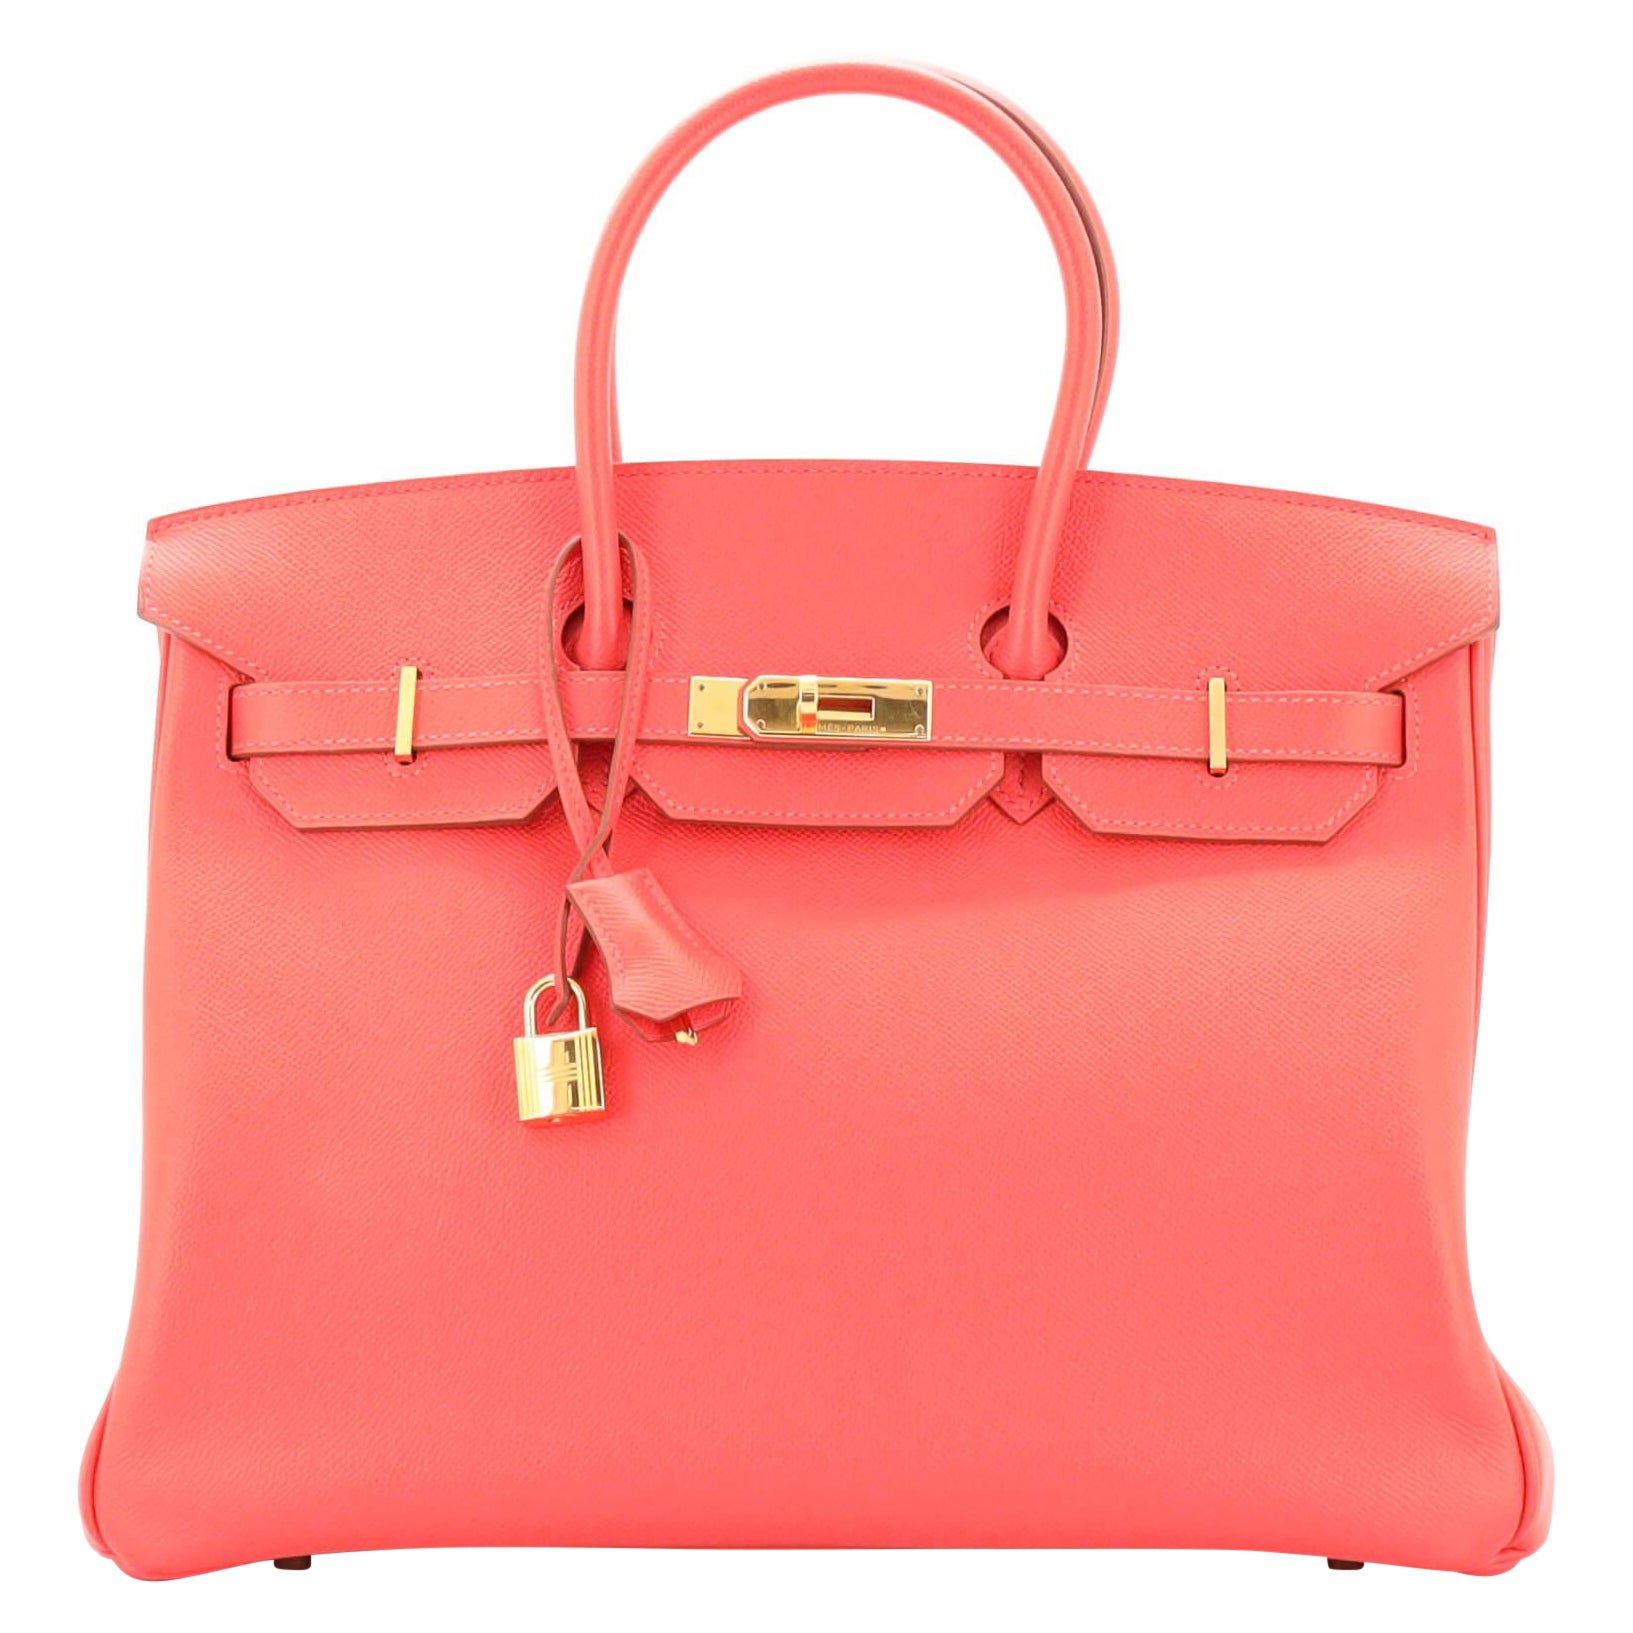 Hermes Birkin Handbag Rose Jaipur Epsom with Gold Hardware 35